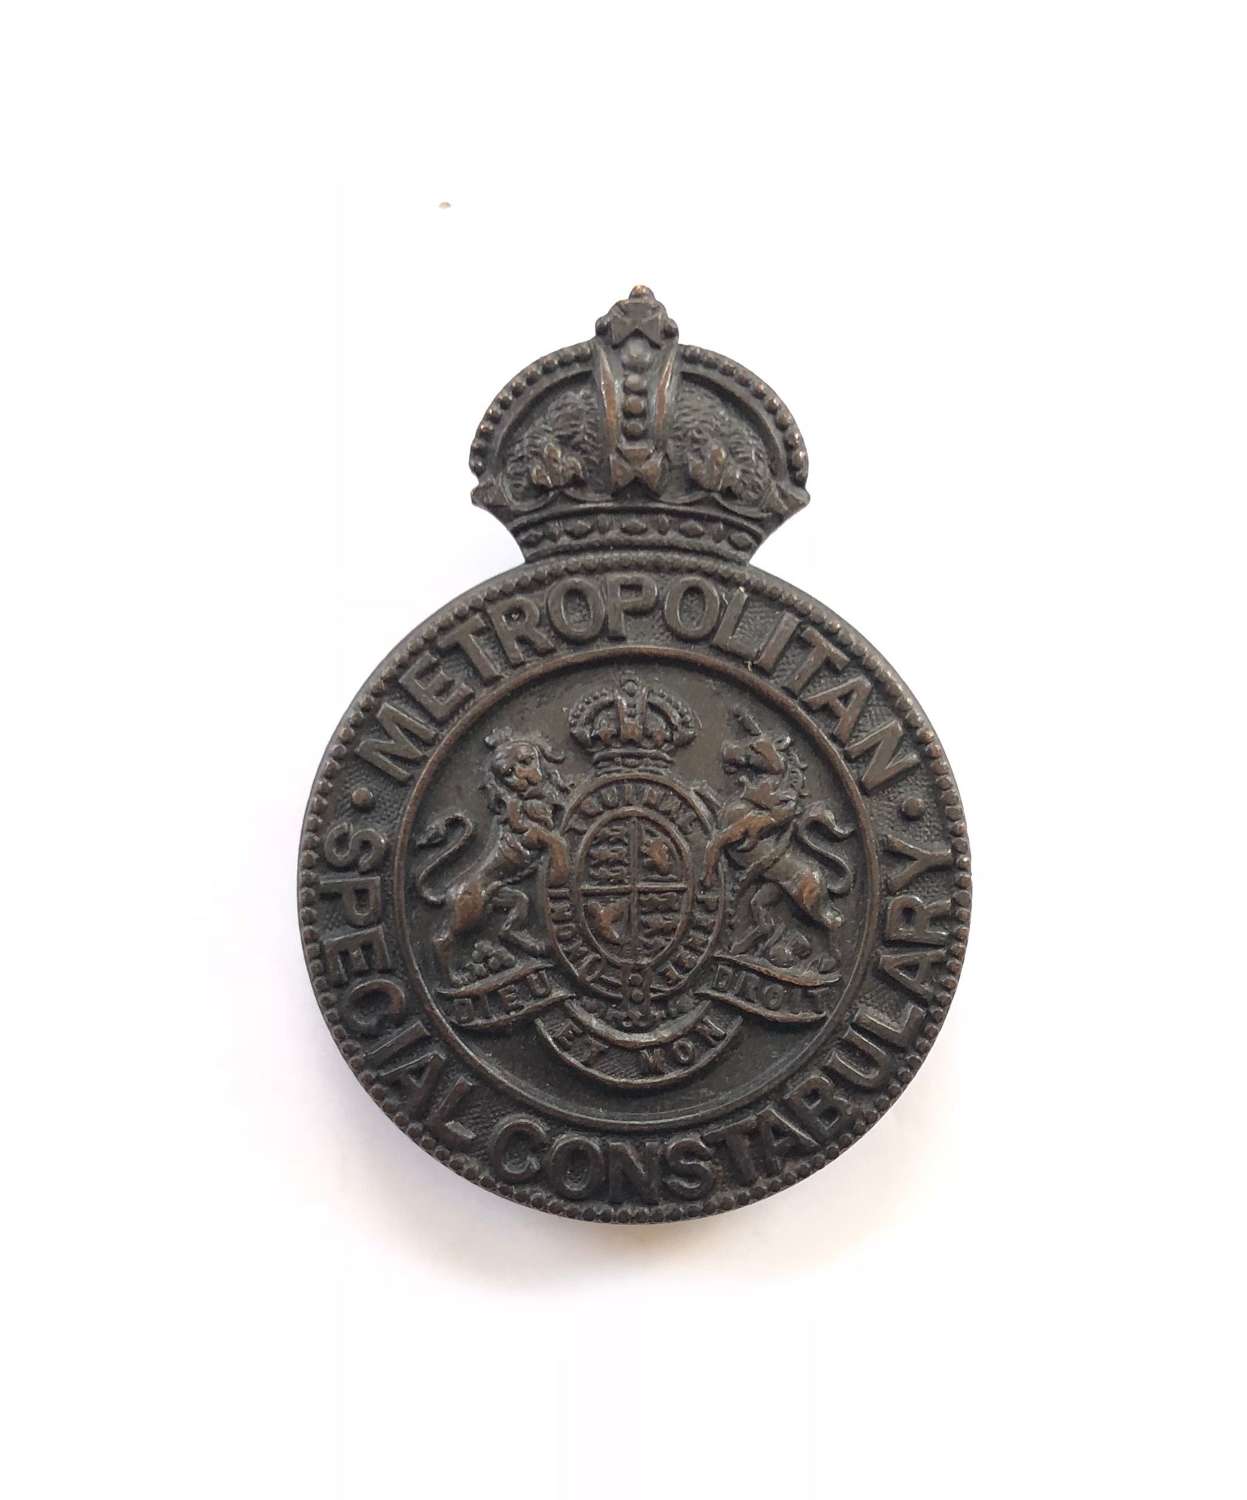 WW1 London Metropolitan Special Constabulary Lapel Badge.